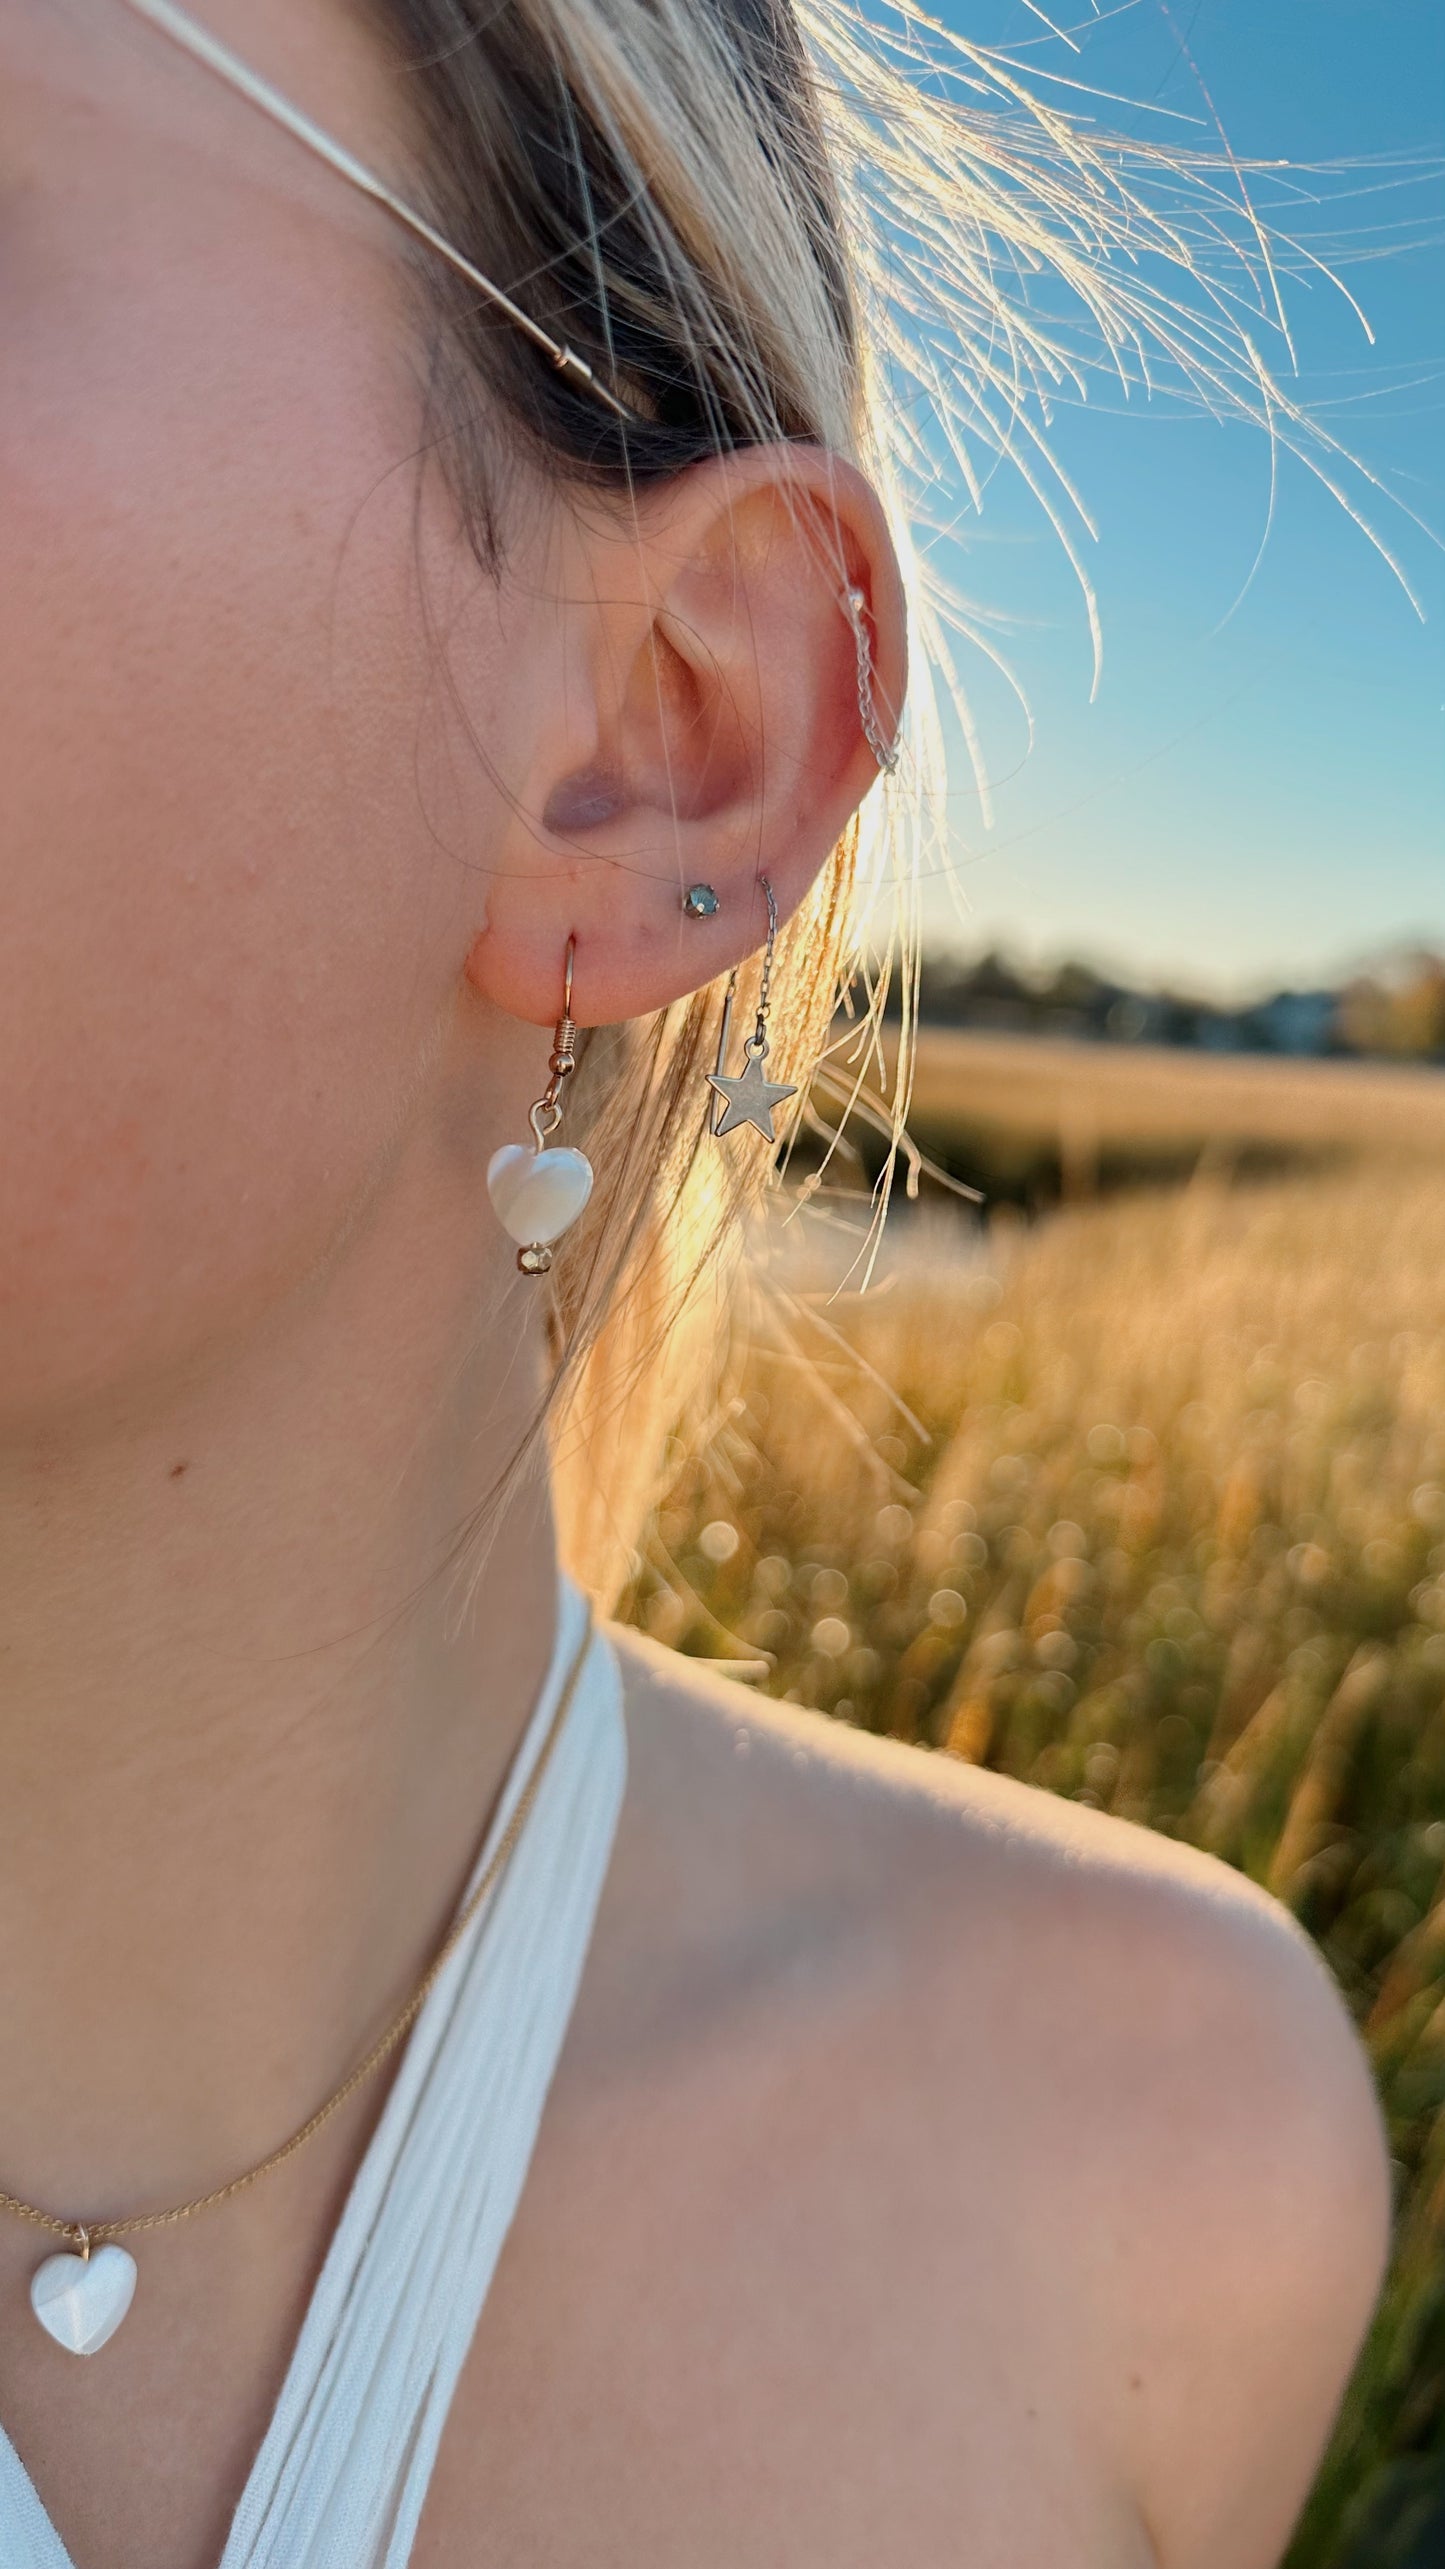 Shell Heart dangle earrings